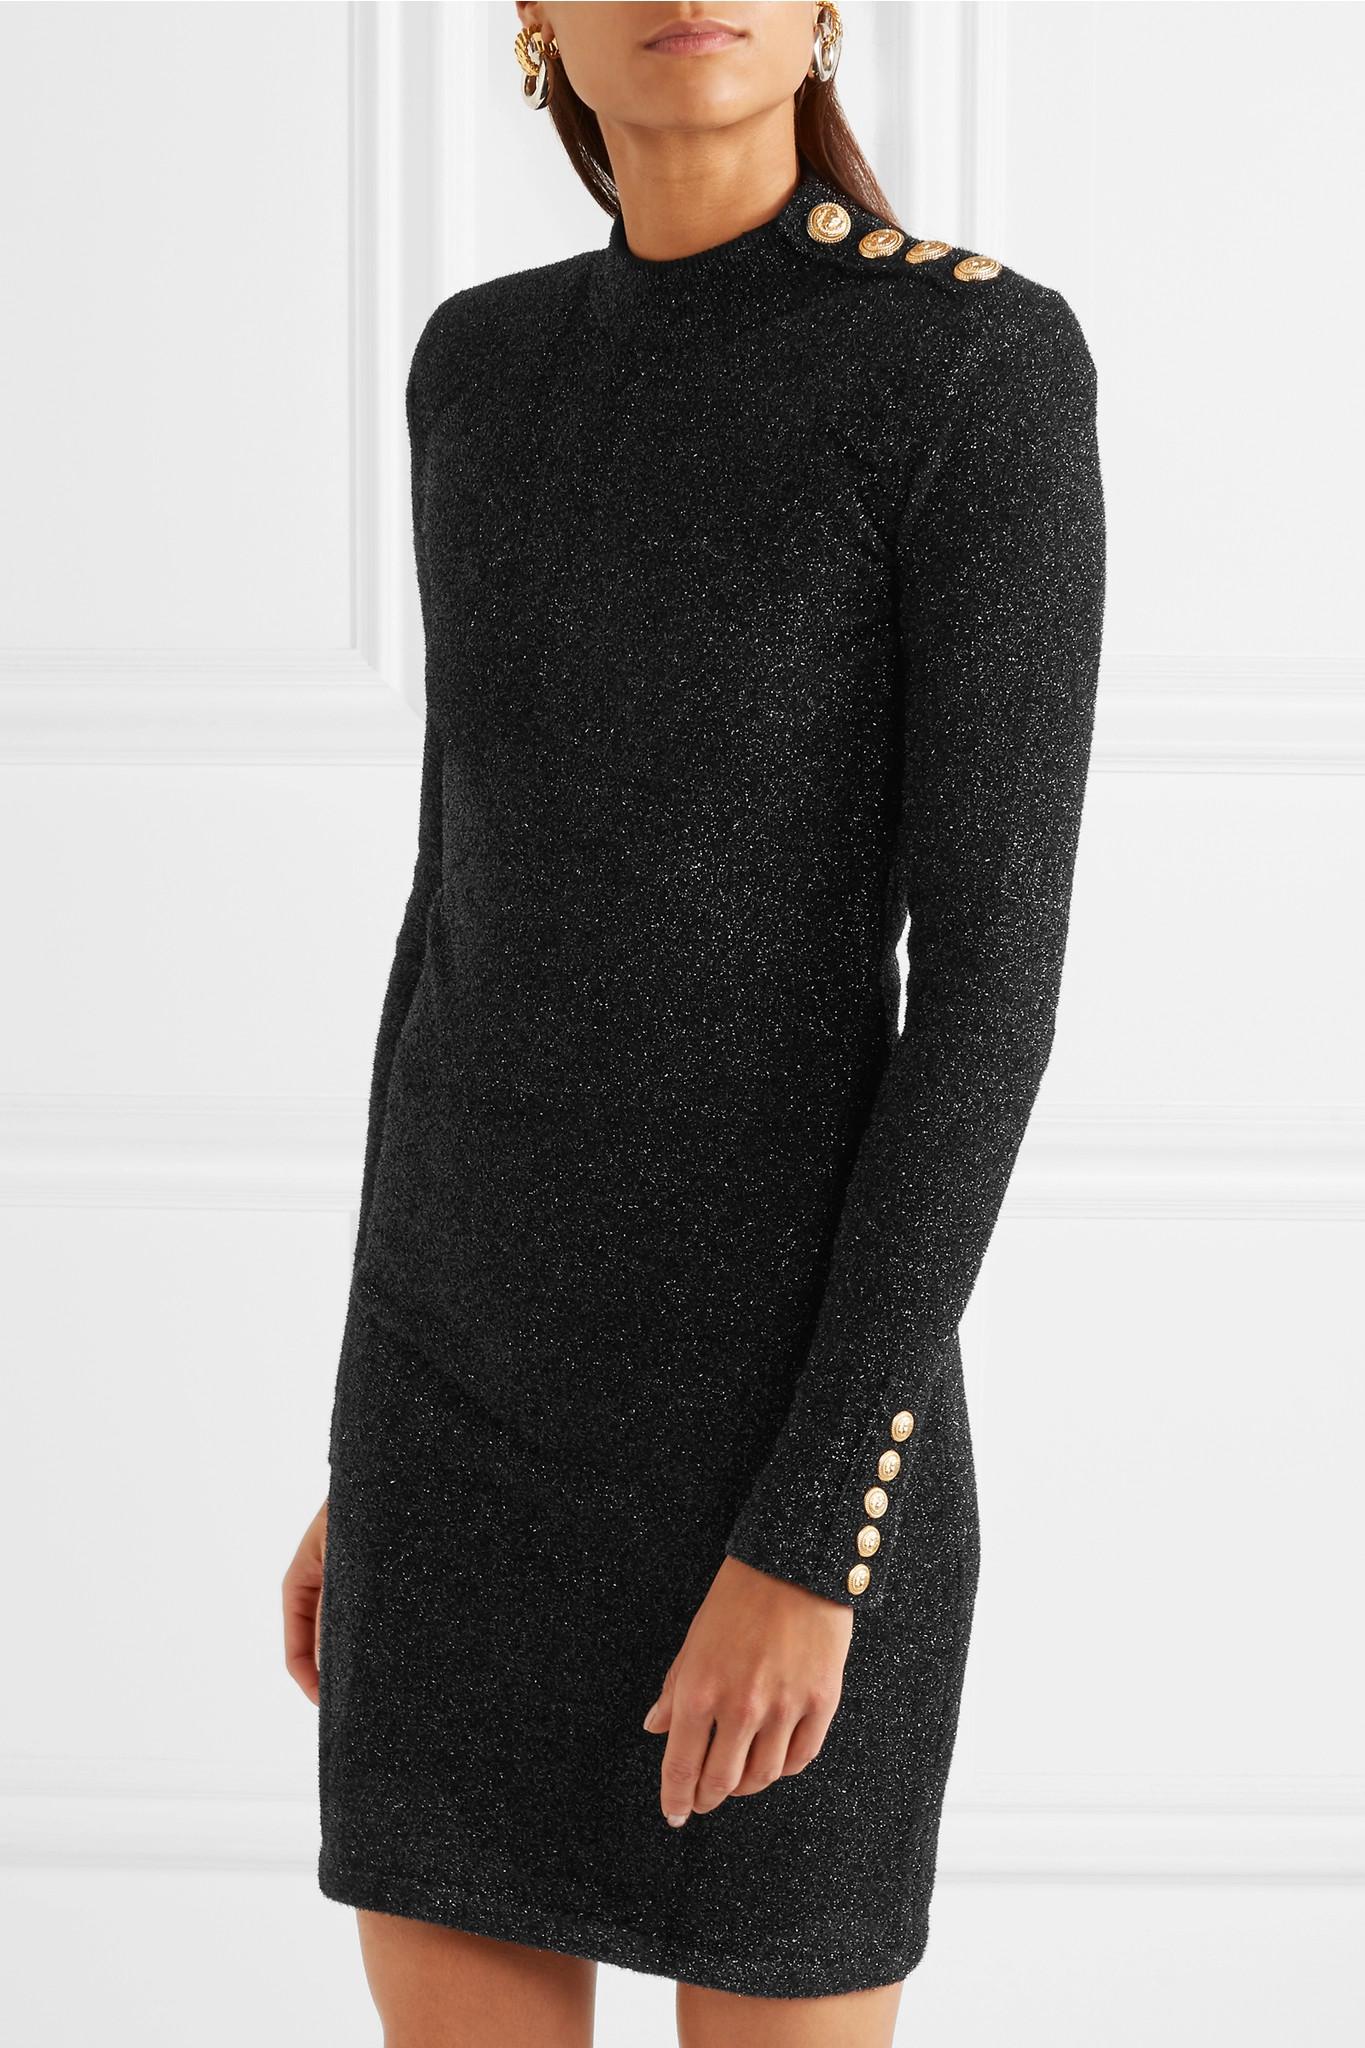 Lyst - Balmain Button-detailed Metallic Knitted Mini Dress in Black